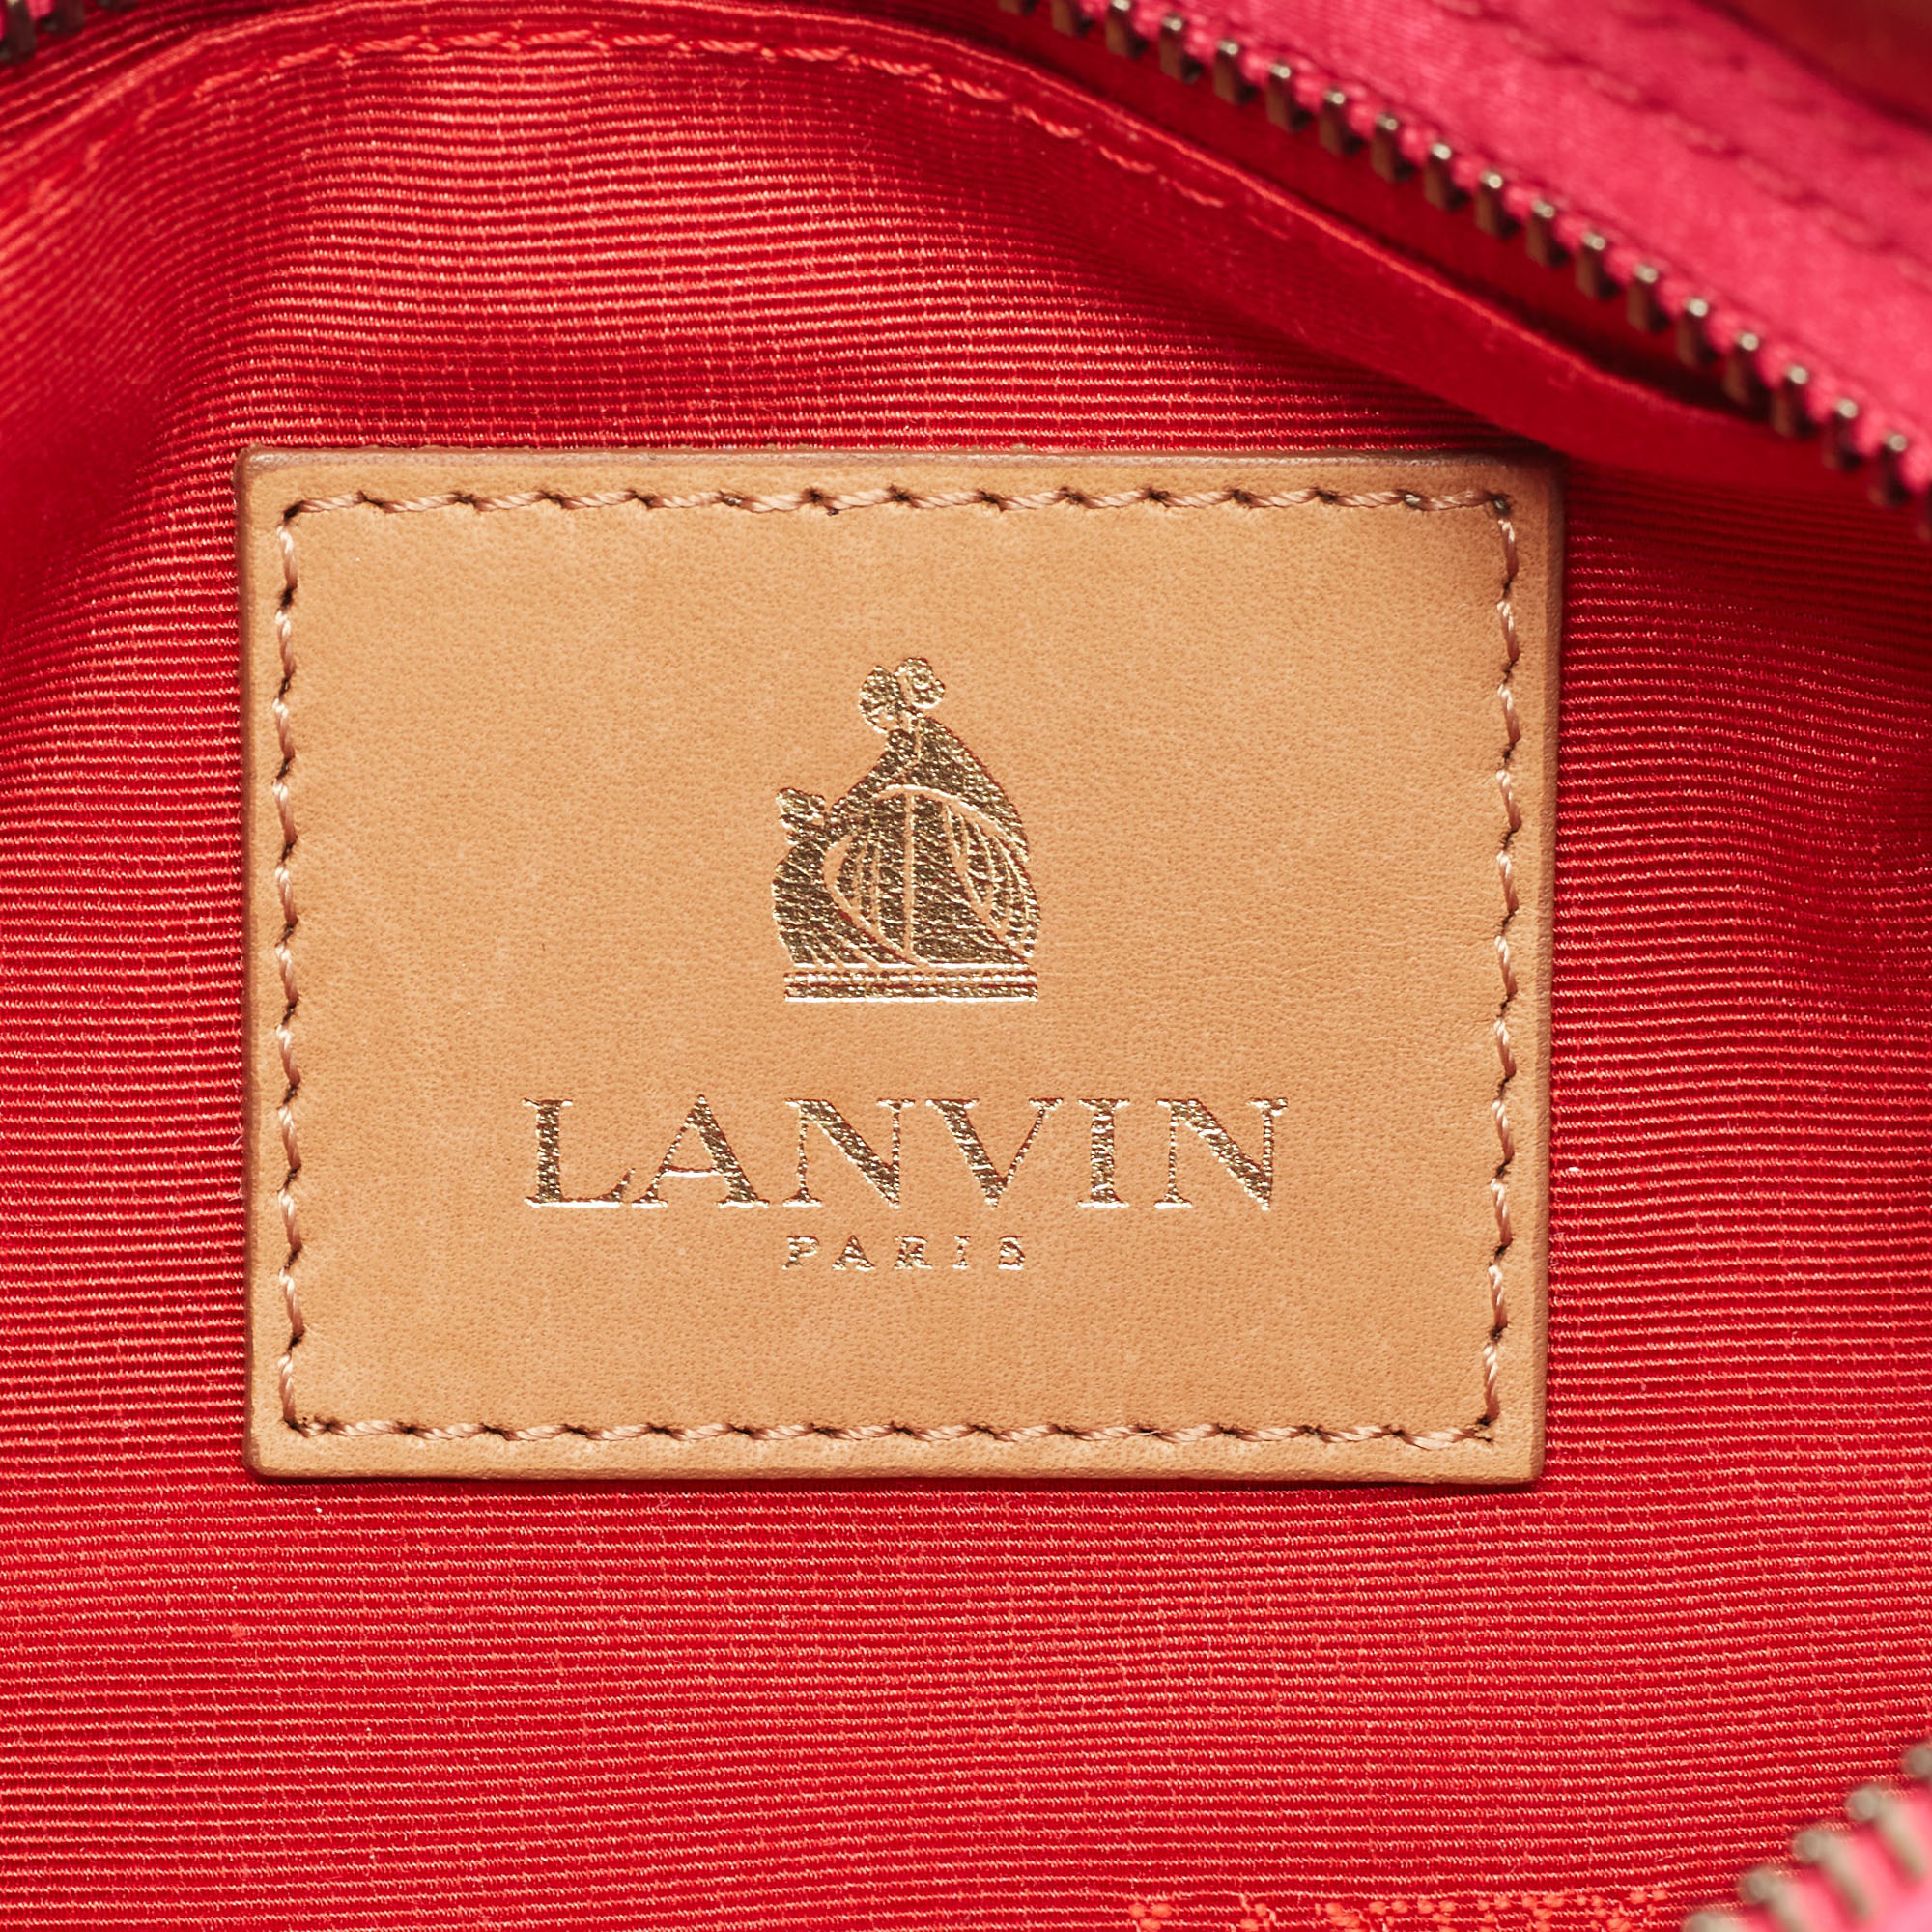 Lanvin Brown/Pink Satin Crystal Embellished Chain Clutch